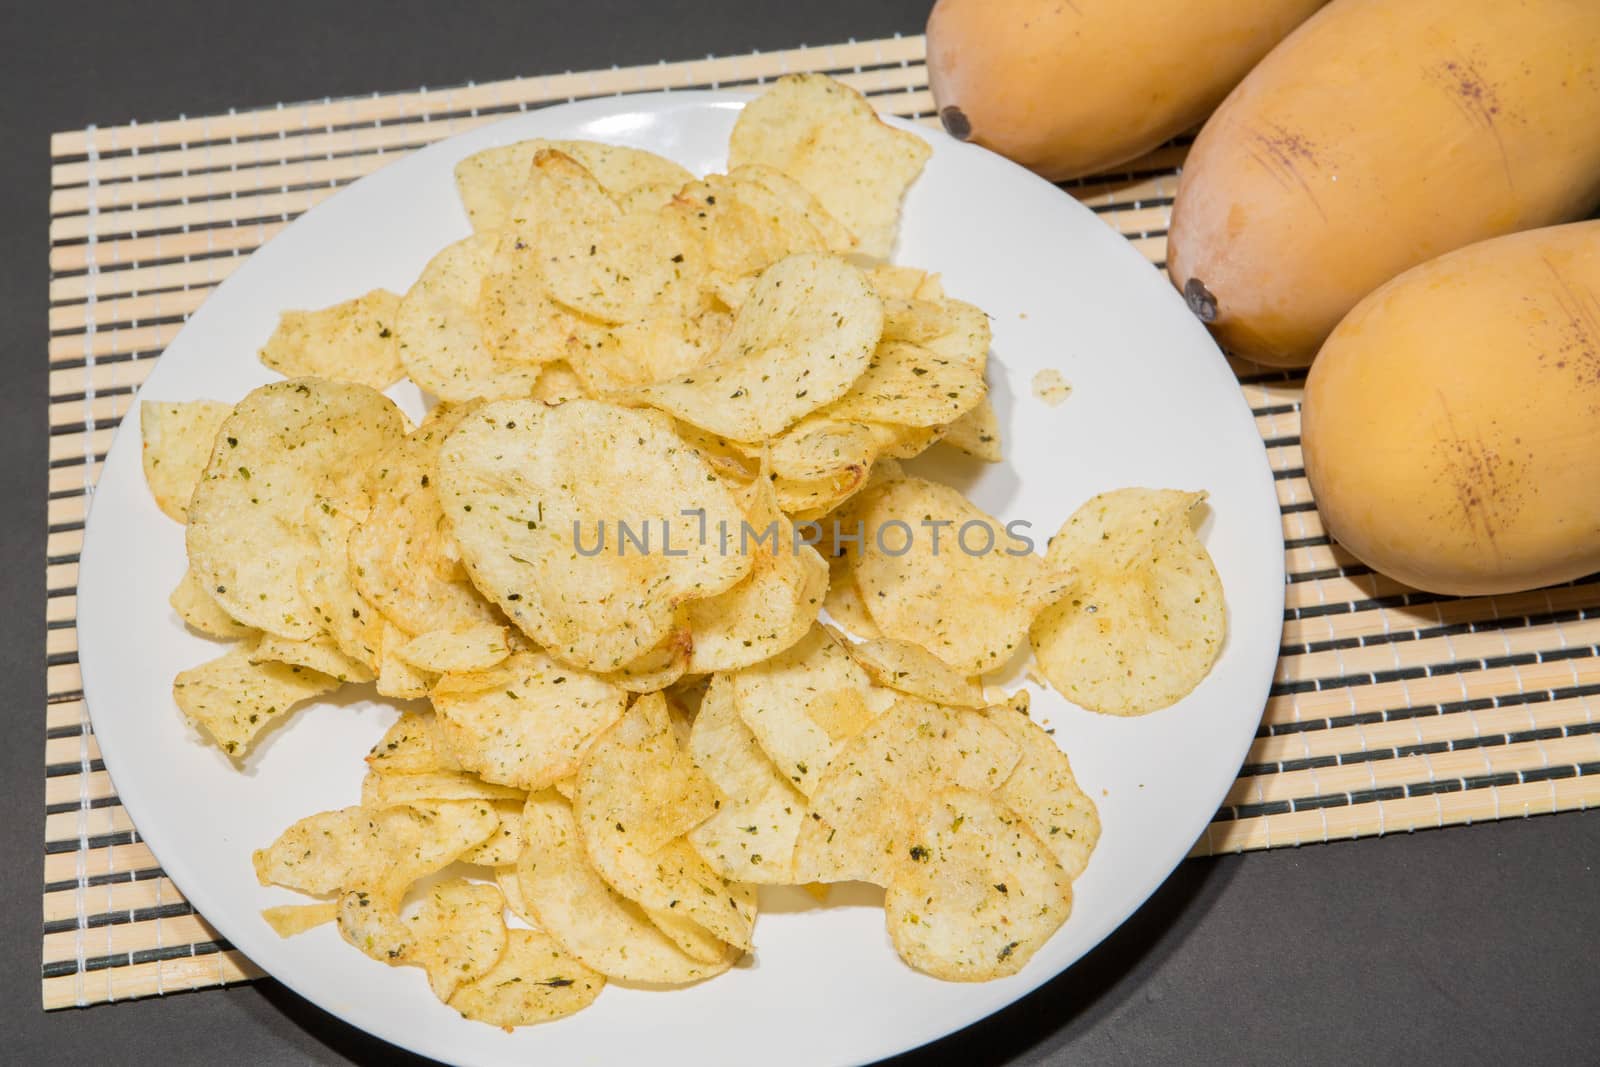 Fried potatoes by tuchkay